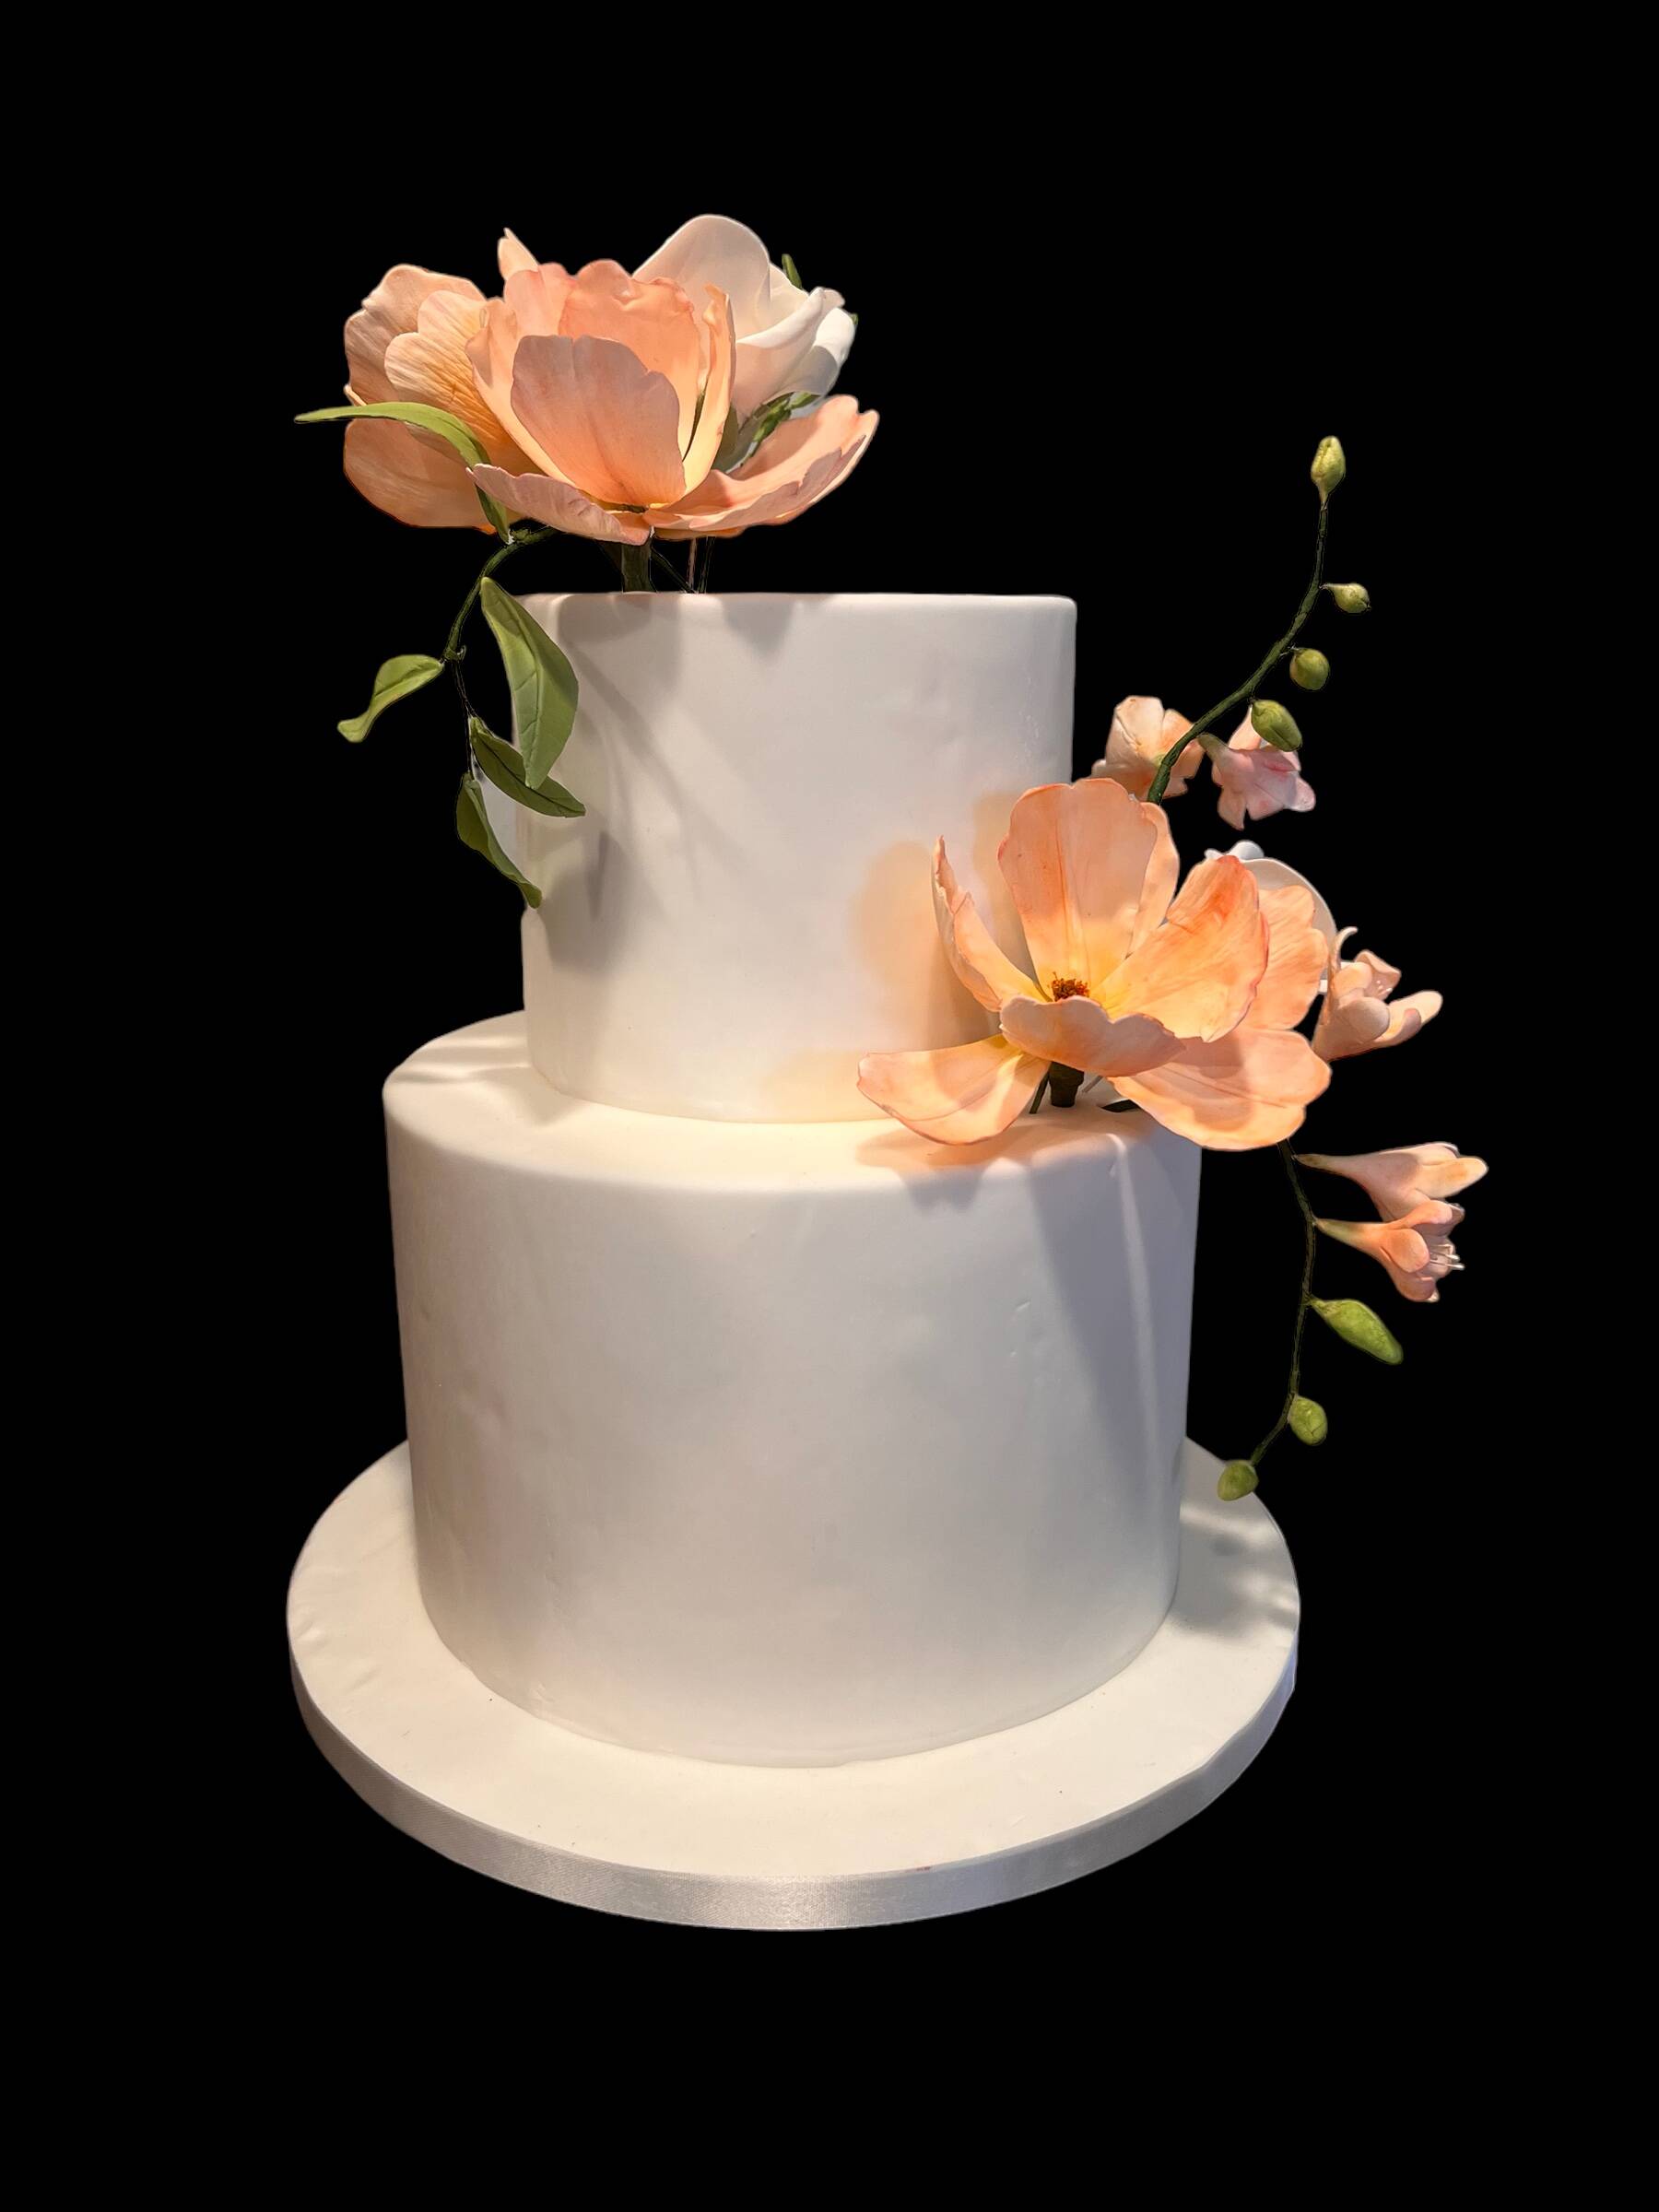 Cute'n'Crazy Cakes - Birthday Cakes, Cake Maker, Anniversary Cake